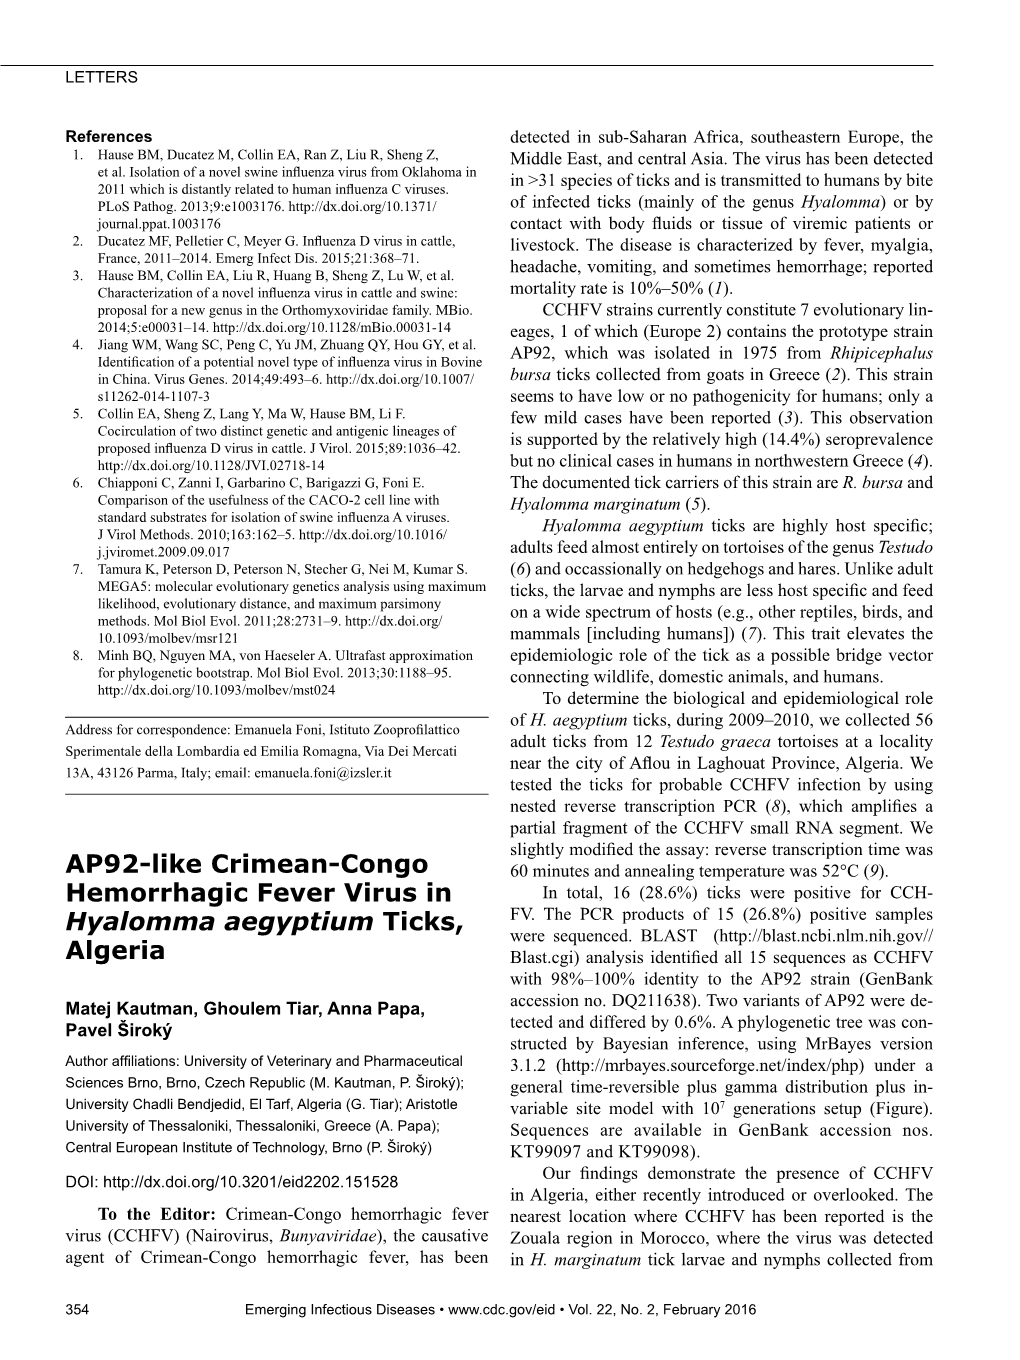 AP92-Like Crimean-Congo Hemorrhagic Fever Virus In